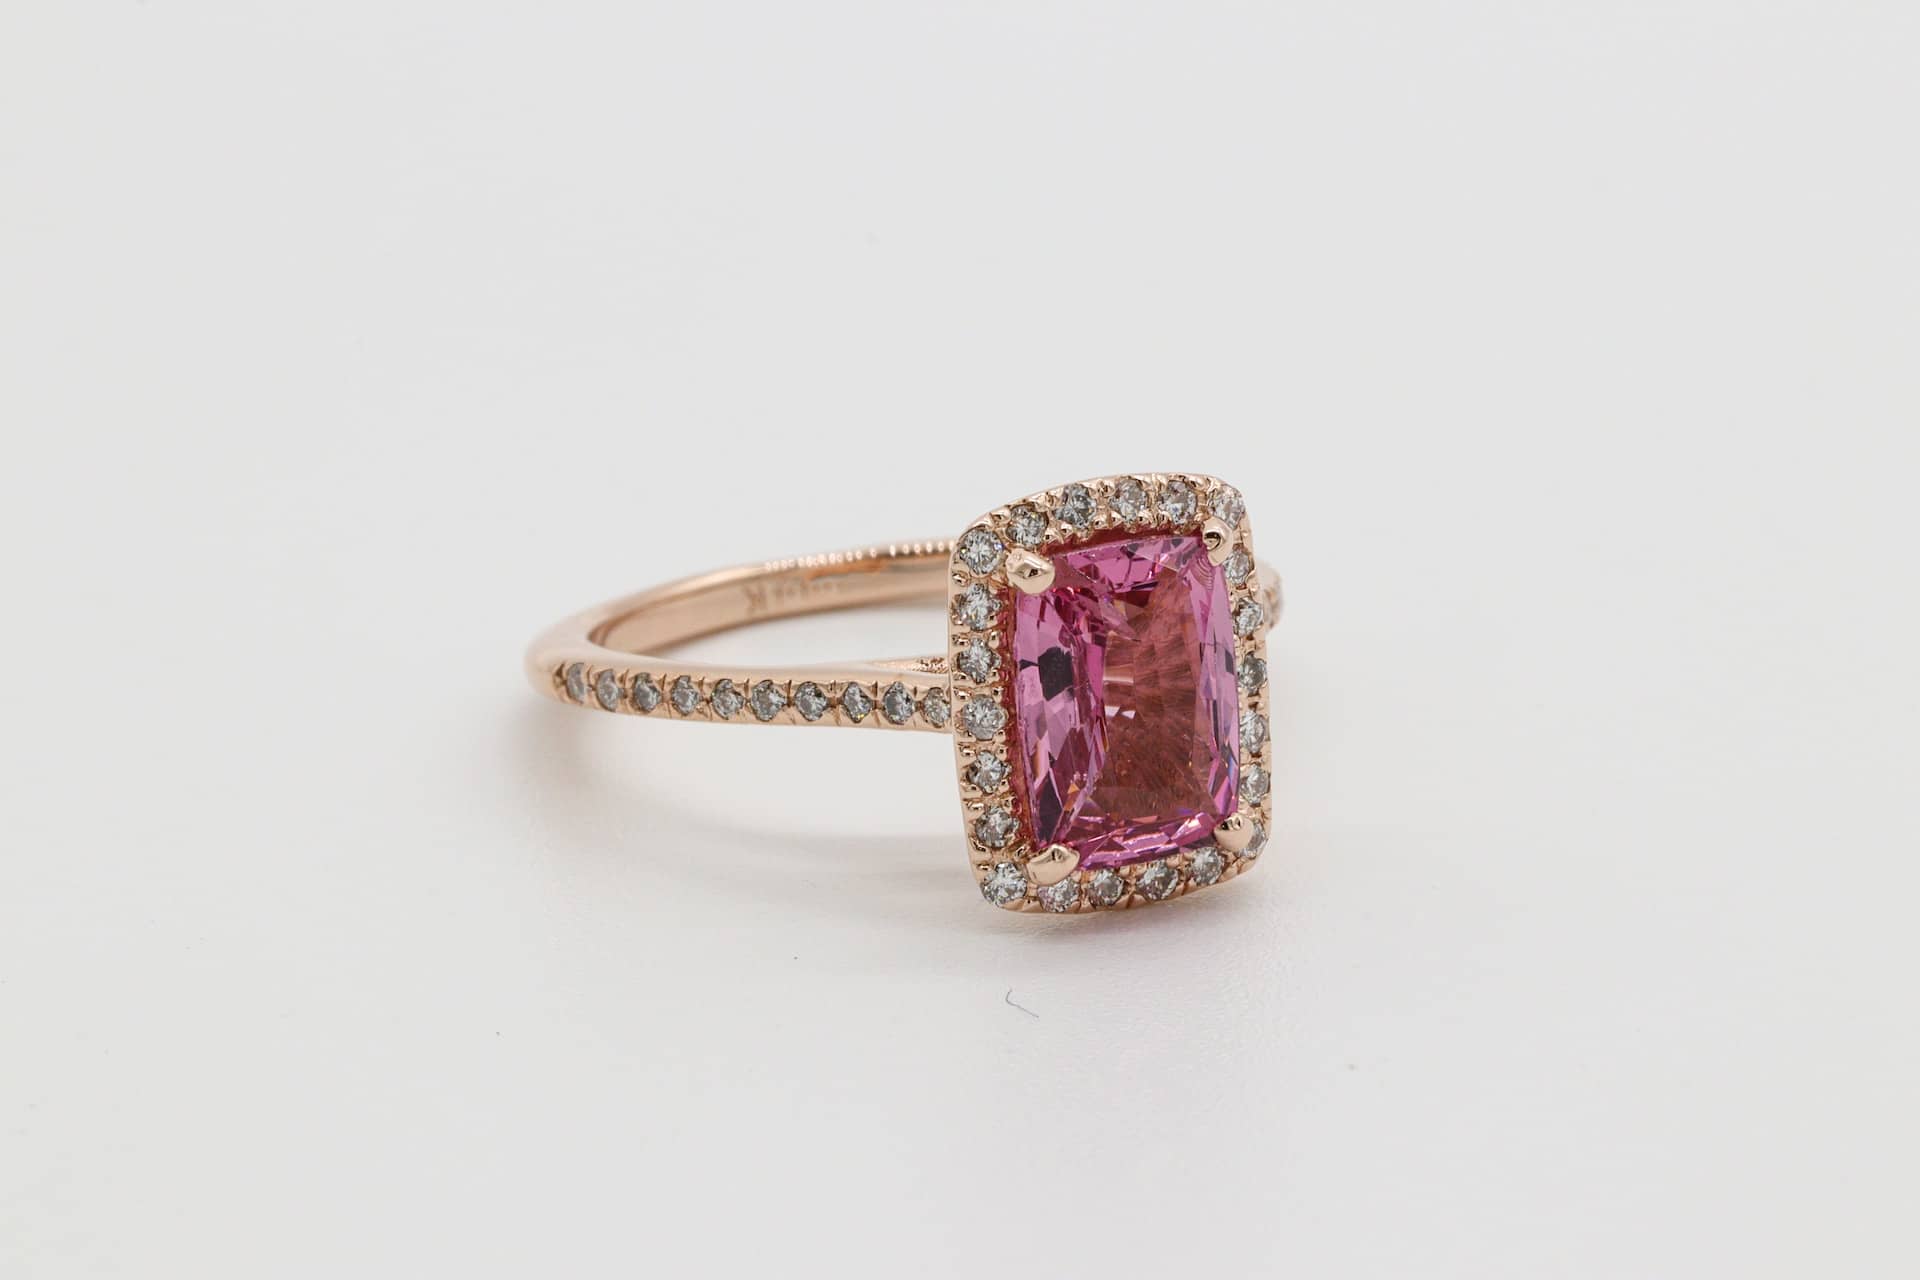 A gold pink tourmaline ring